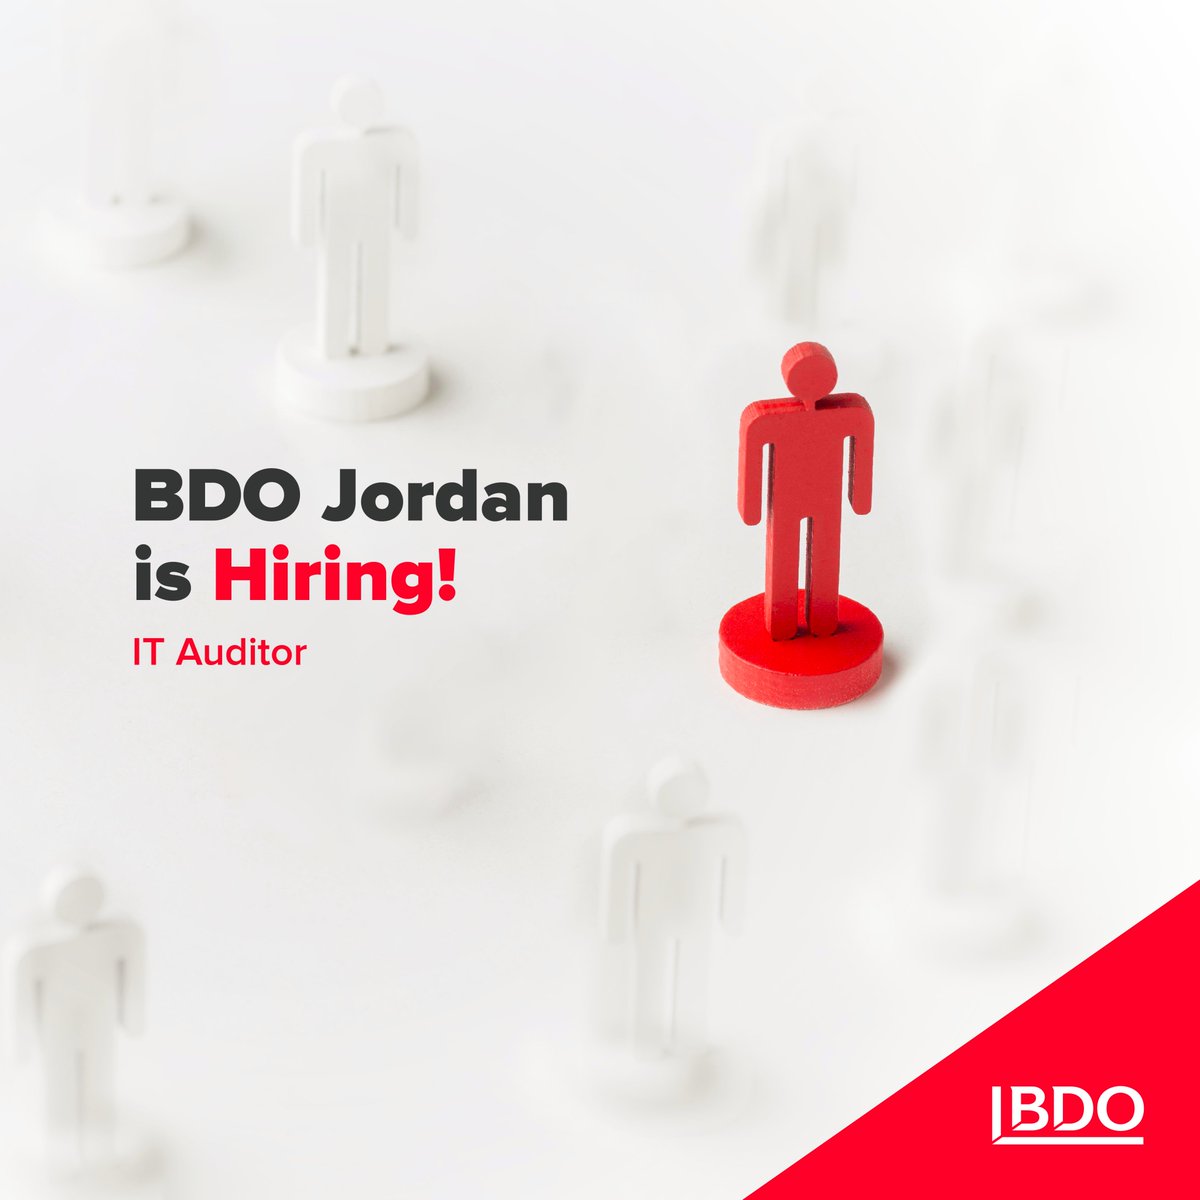 BDO Open Vacancy: IT Auditor

linkedin.com/posts/bdo-jord…

#BDOJordan #ITAudit #hiring